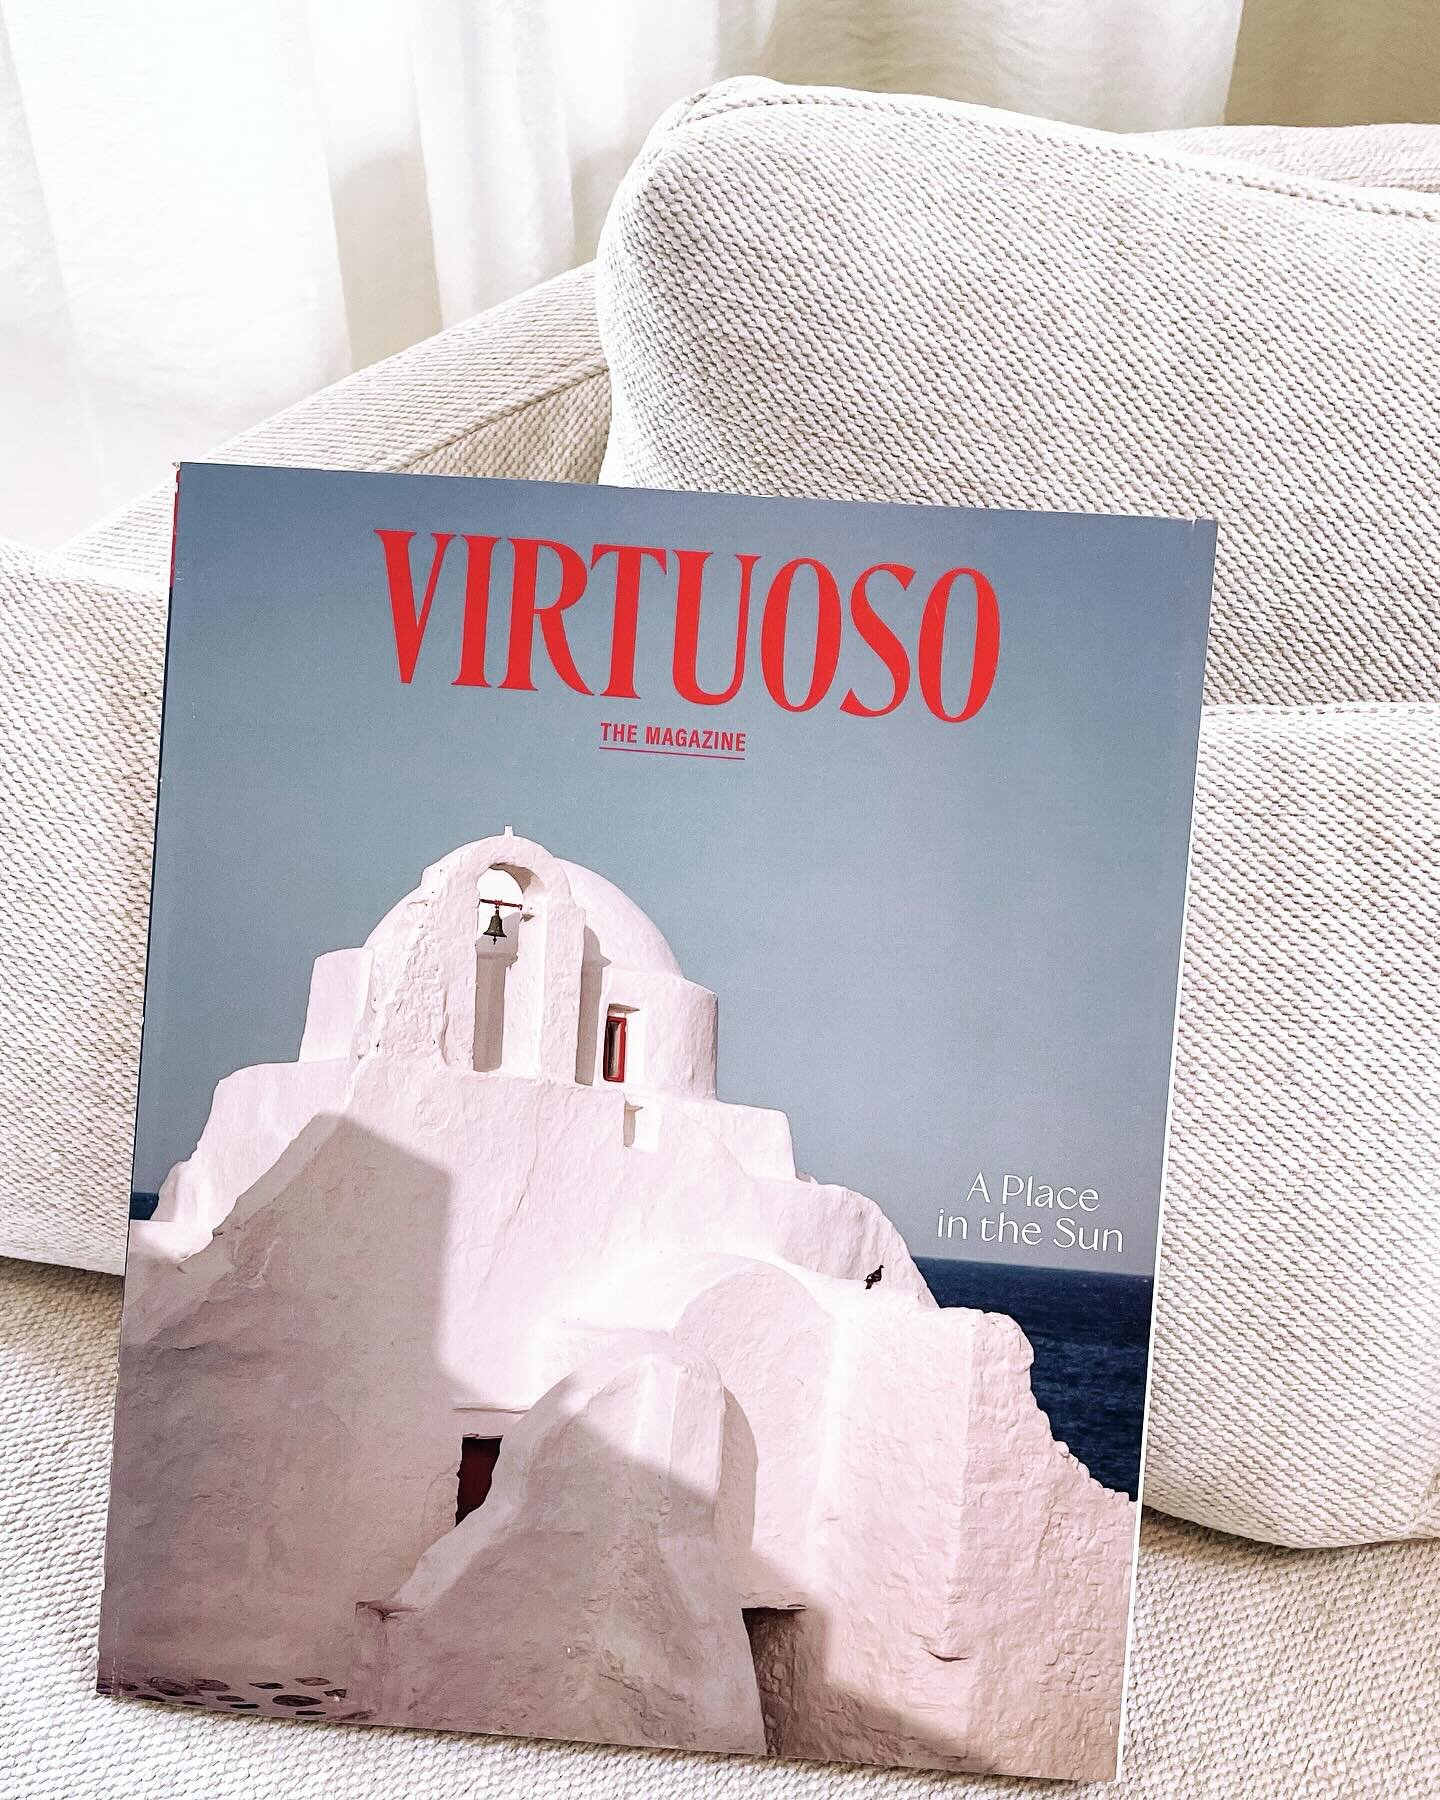 Hot off the press! 🔥VIRTUOSO - The magazine - featuring one of our favorite destinations!  DM us to learn more @curatedtravel #virtuosomagazine #virtuosos #luxurytravel #luxurytraveladvisor